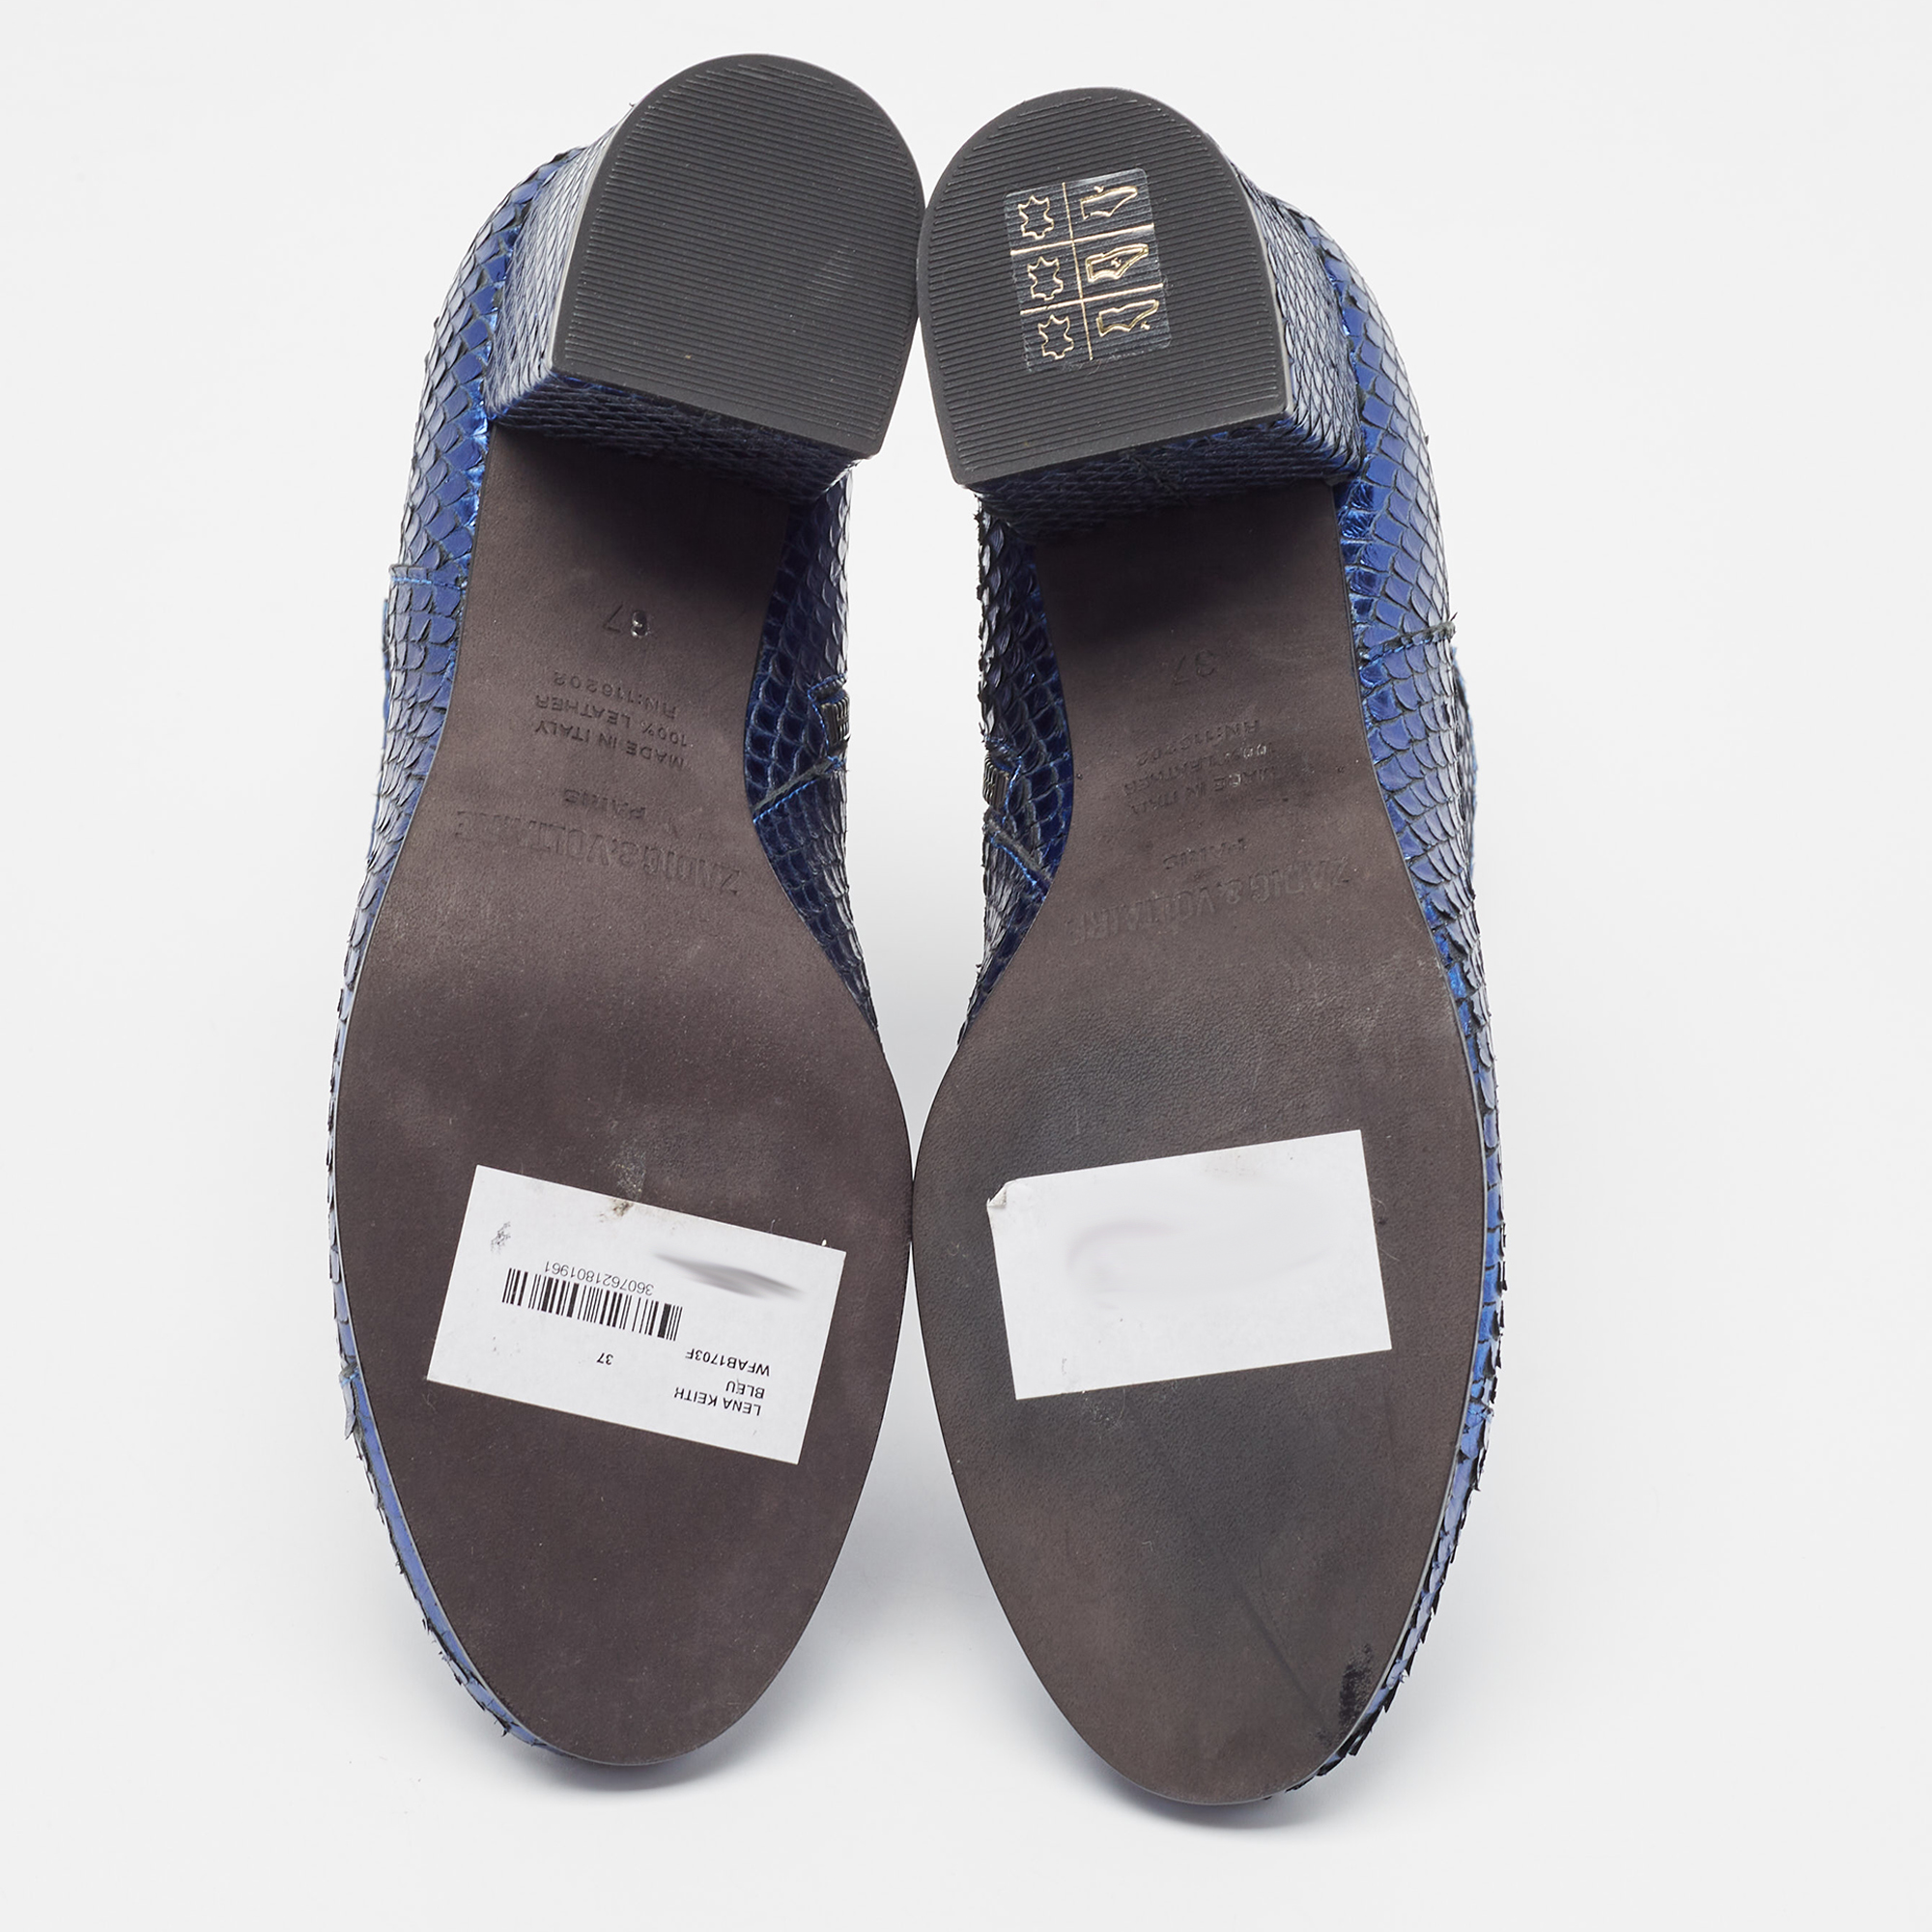 Zadiq & Voltaire Blue Python  Leather Block Heel Ankle Boots Size 37